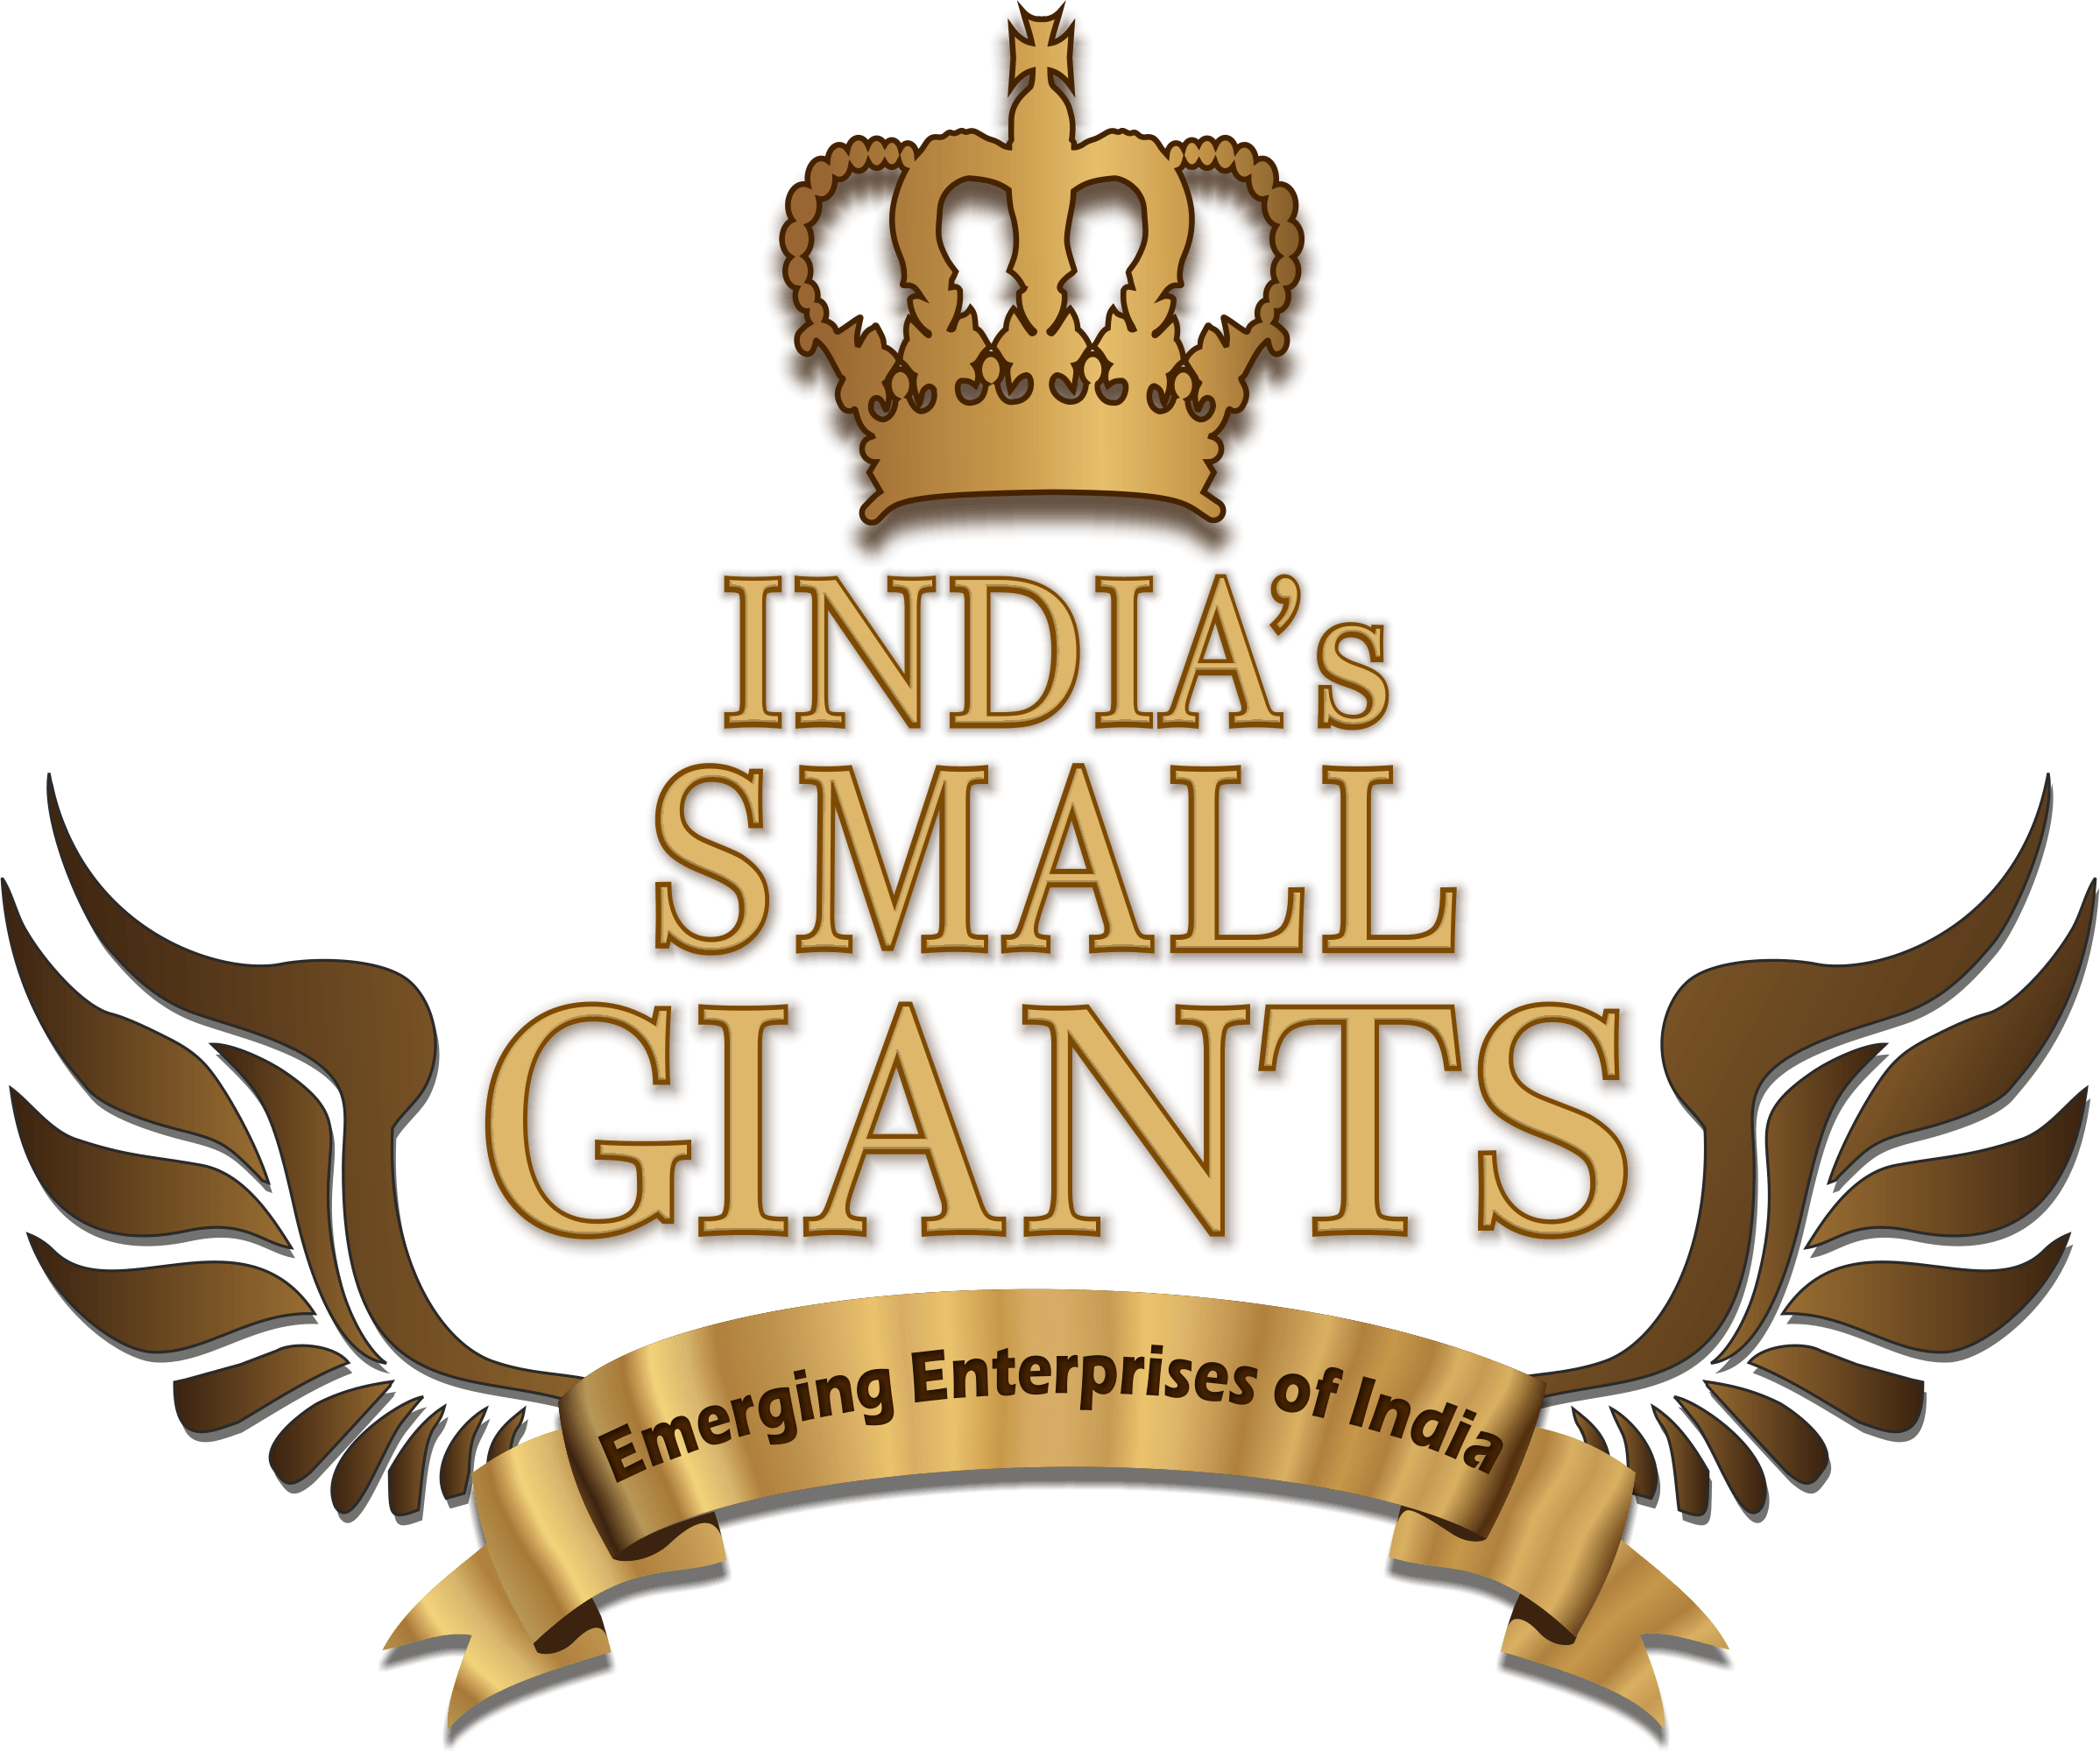 Small Giants Logo - ndtv's Small Giants